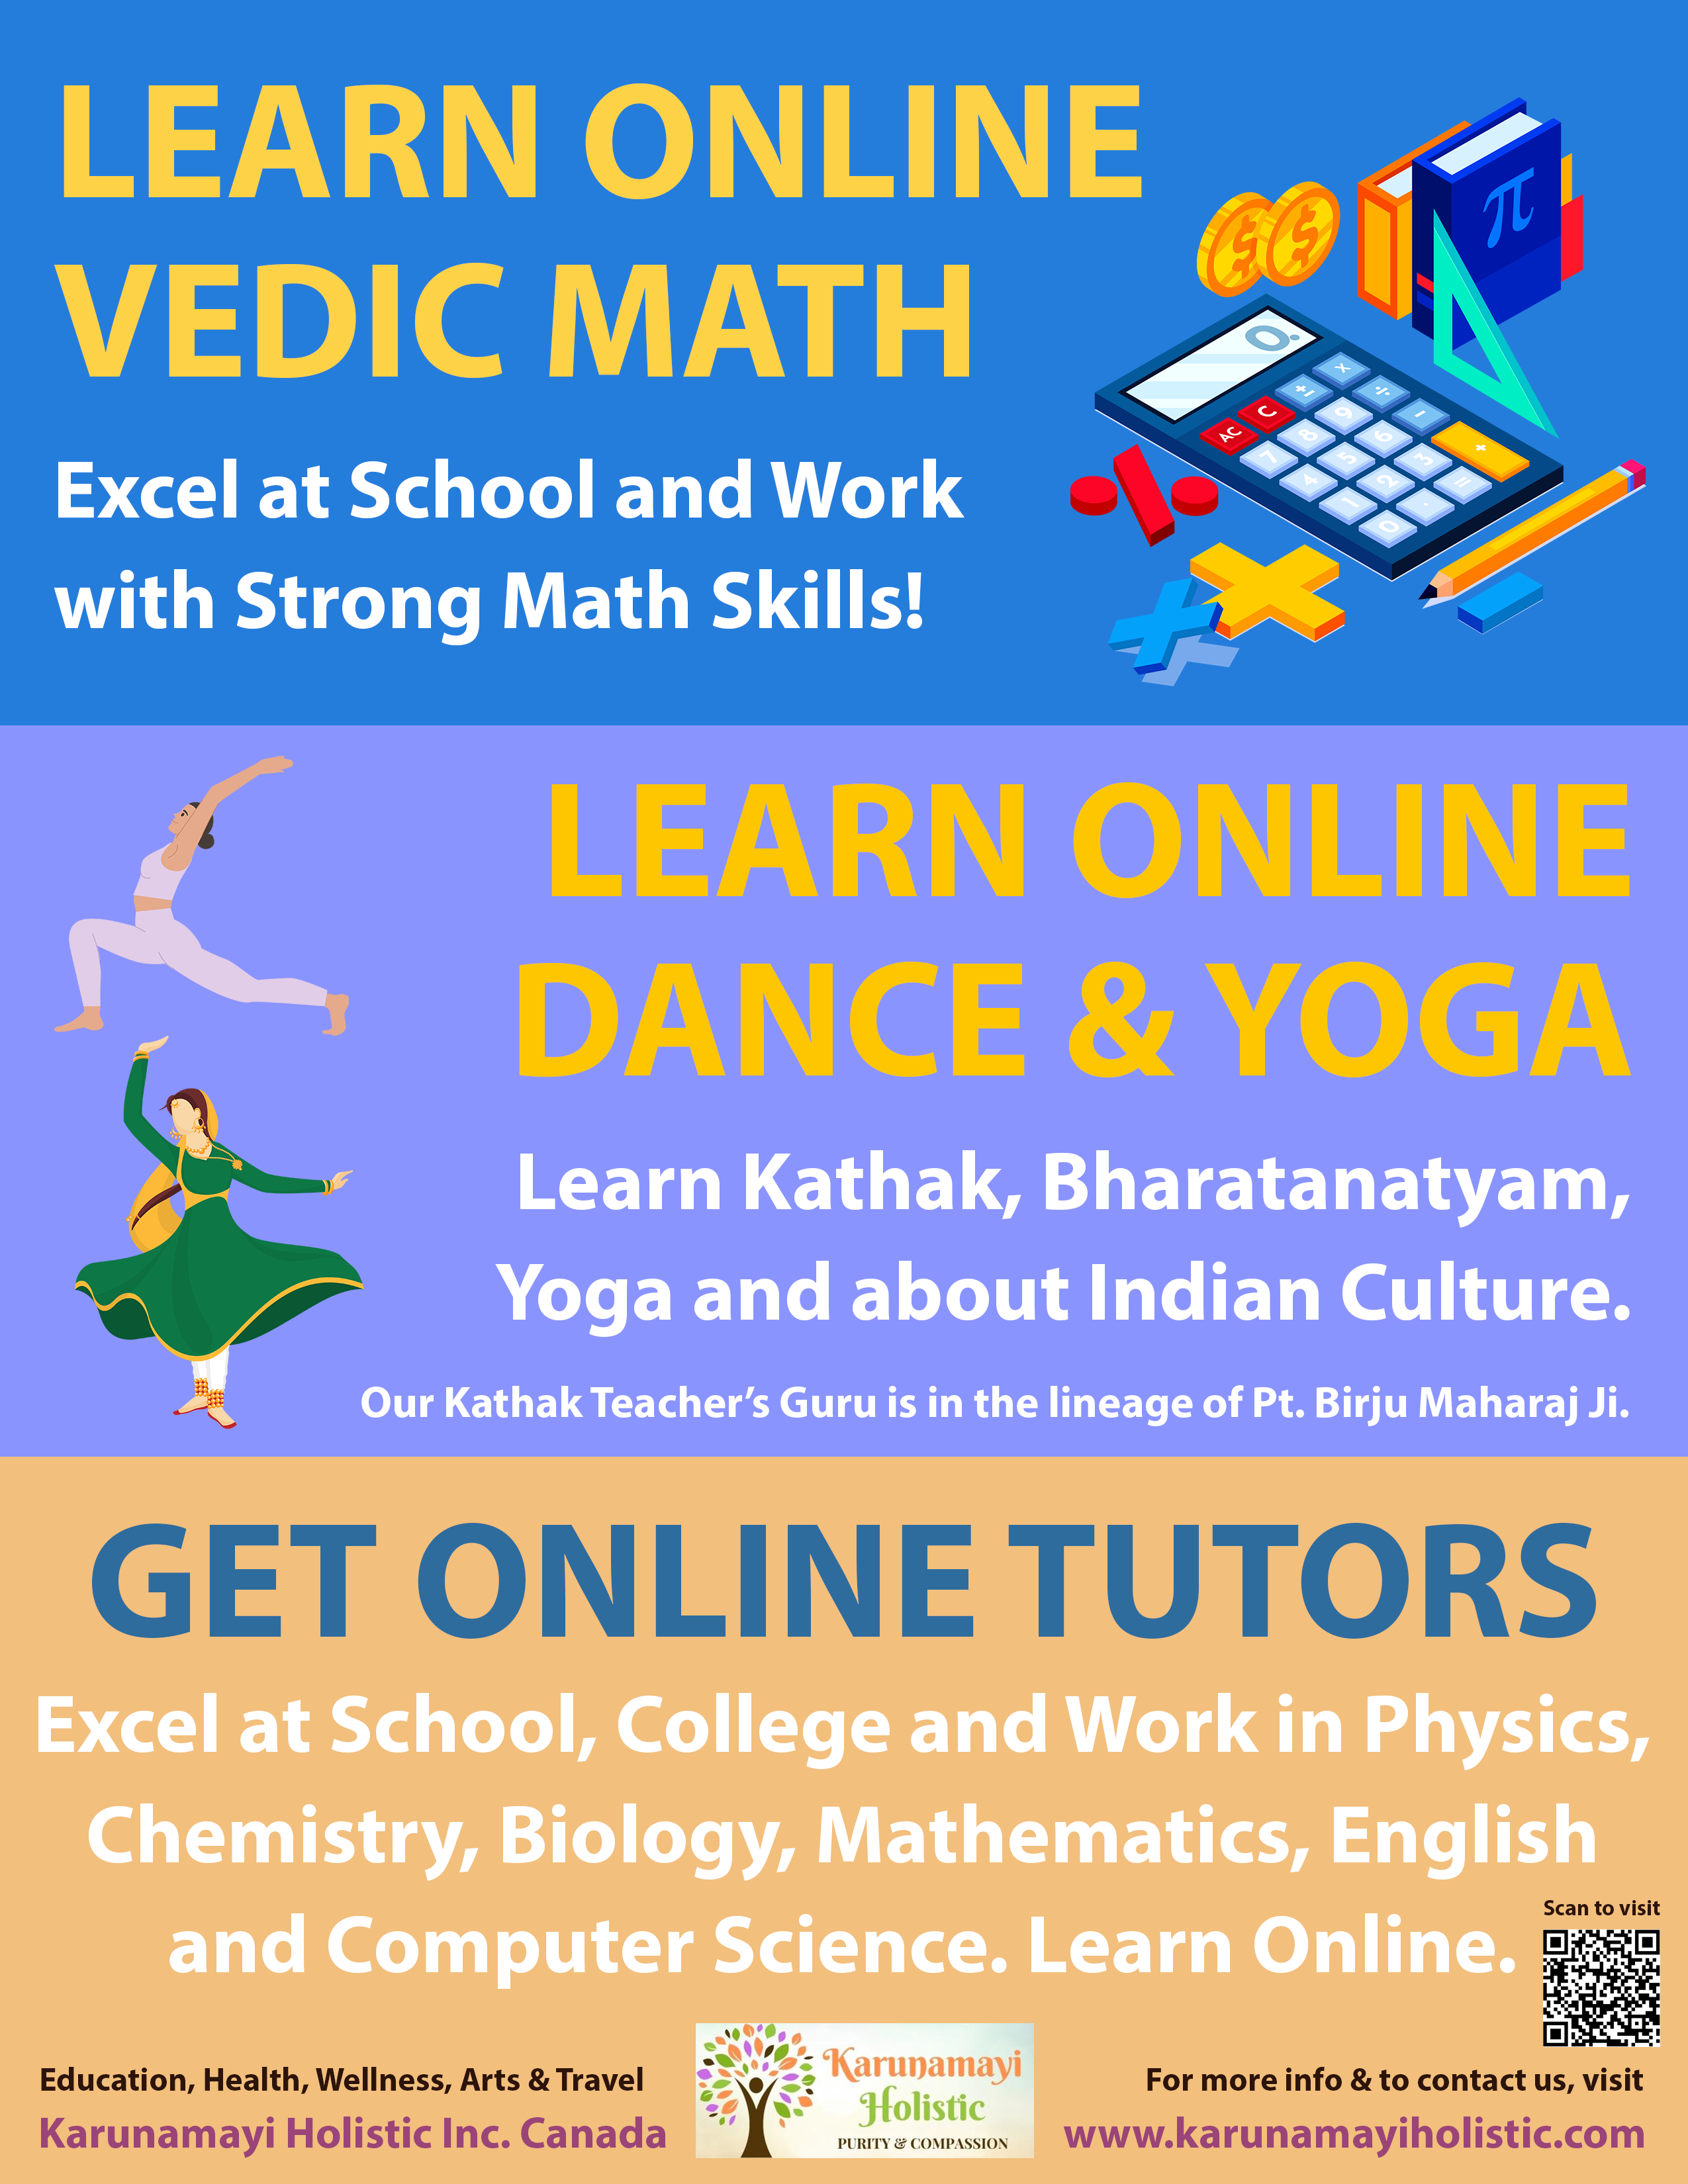 Learn Kathak Bharatanatyam Yoga Vedic Math Science Biology Physics Chemistry Computer Science IT Online Teachers Tutors - Karunamayi Holistic Inc Canada USA UK Europe Australia India